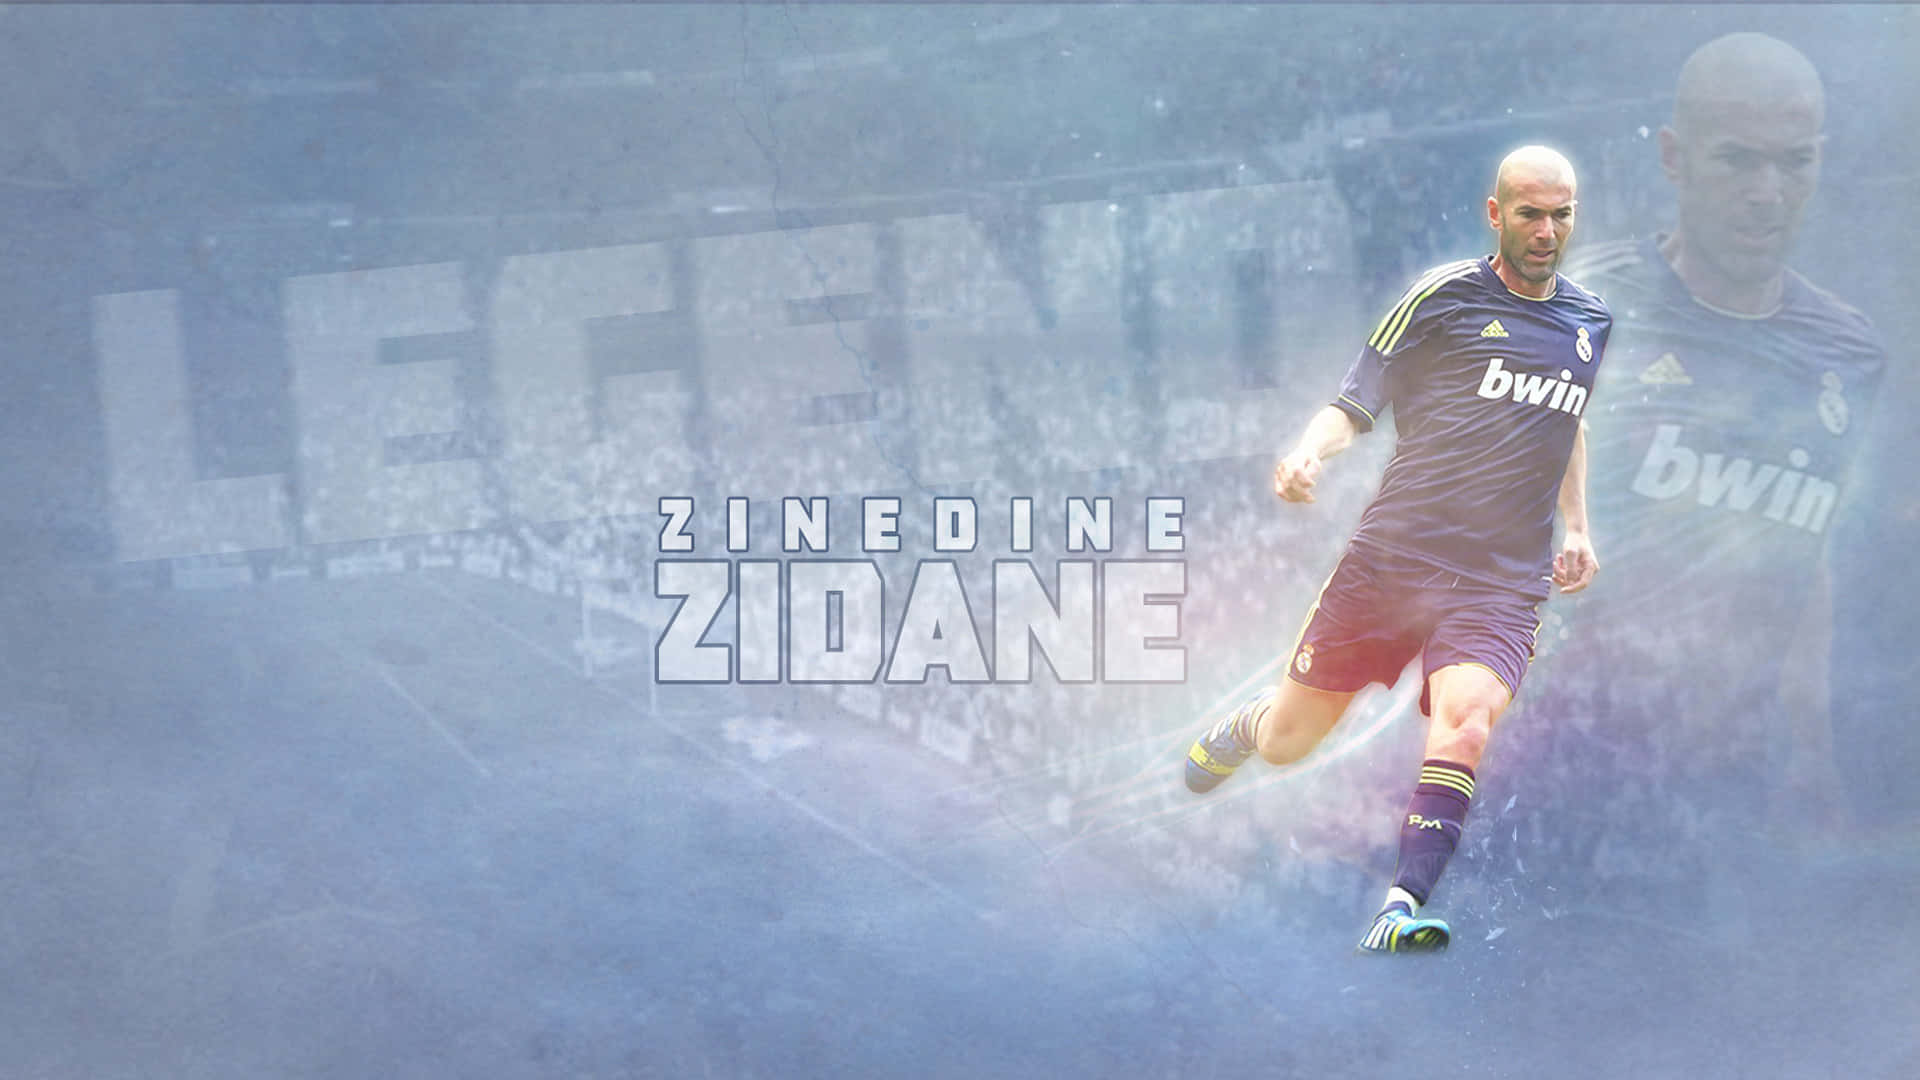 Zinedinezidane, Leggendario Maestro Del Calcio Sfondo